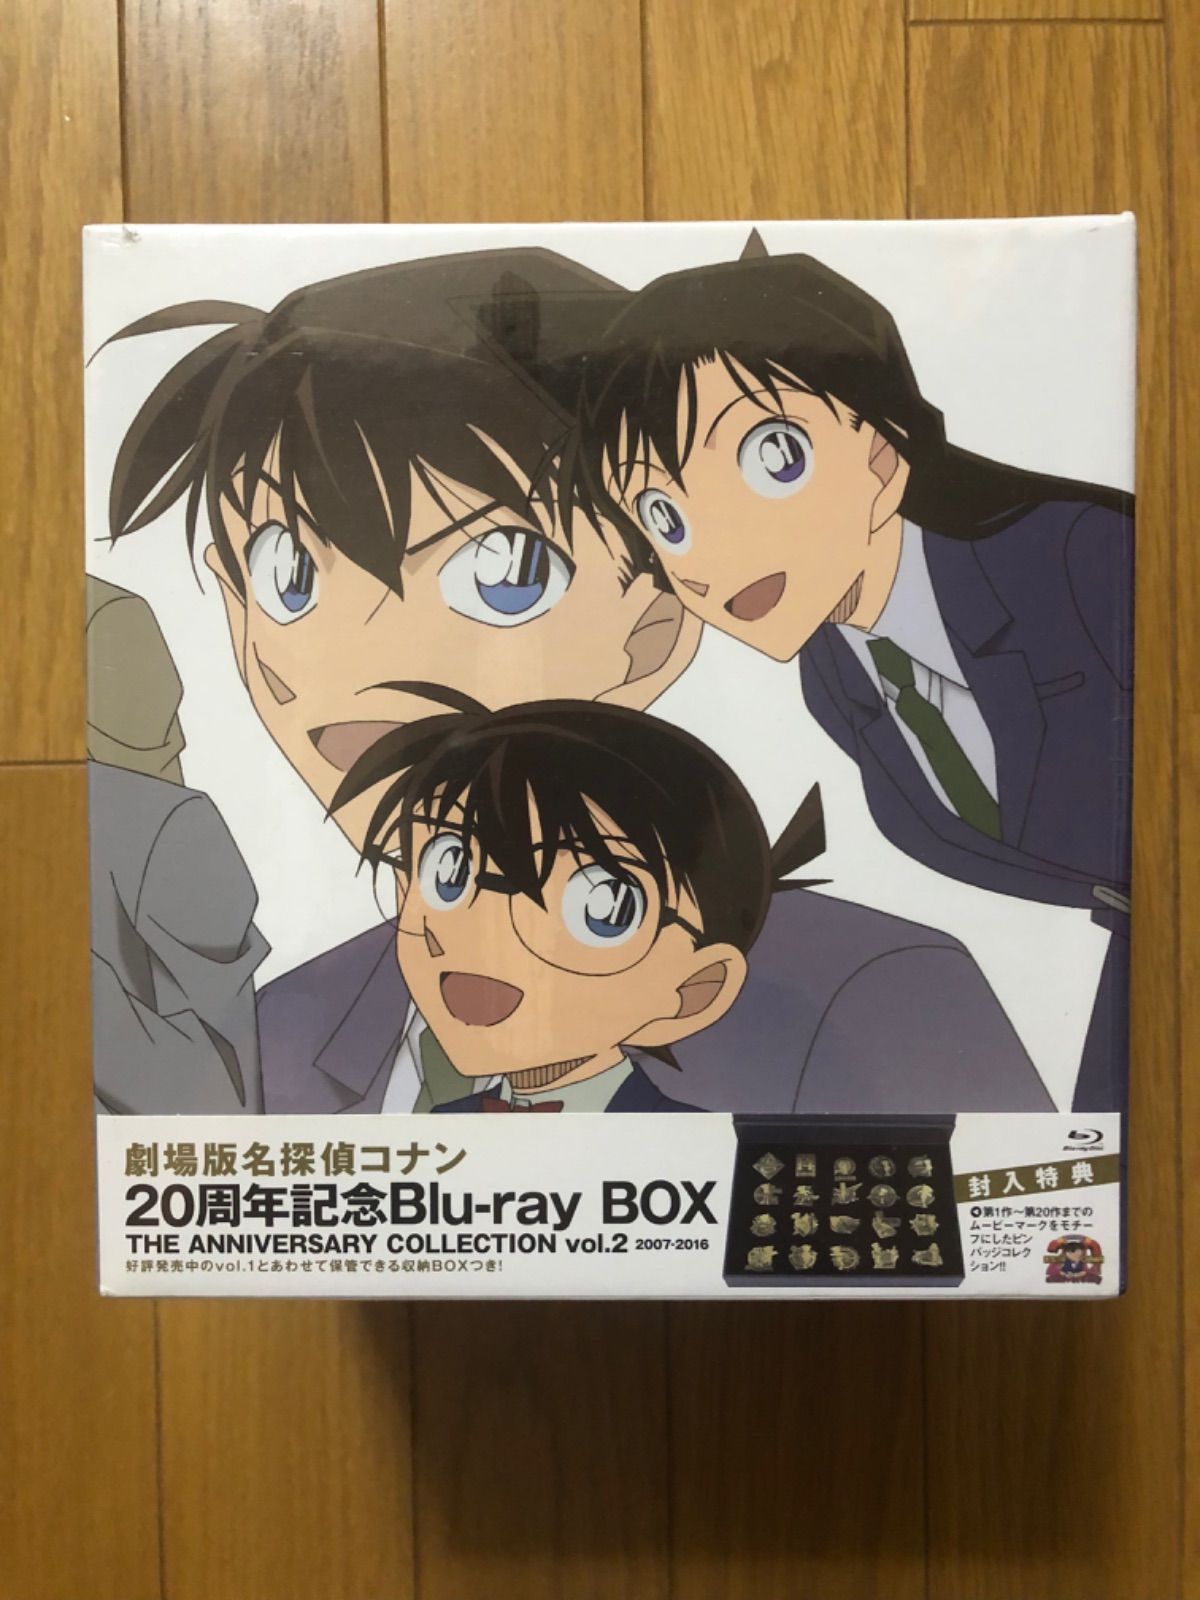 名探偵コナン 20周年記念Blu-ray BOX Vol.2 2007-2016商品説明